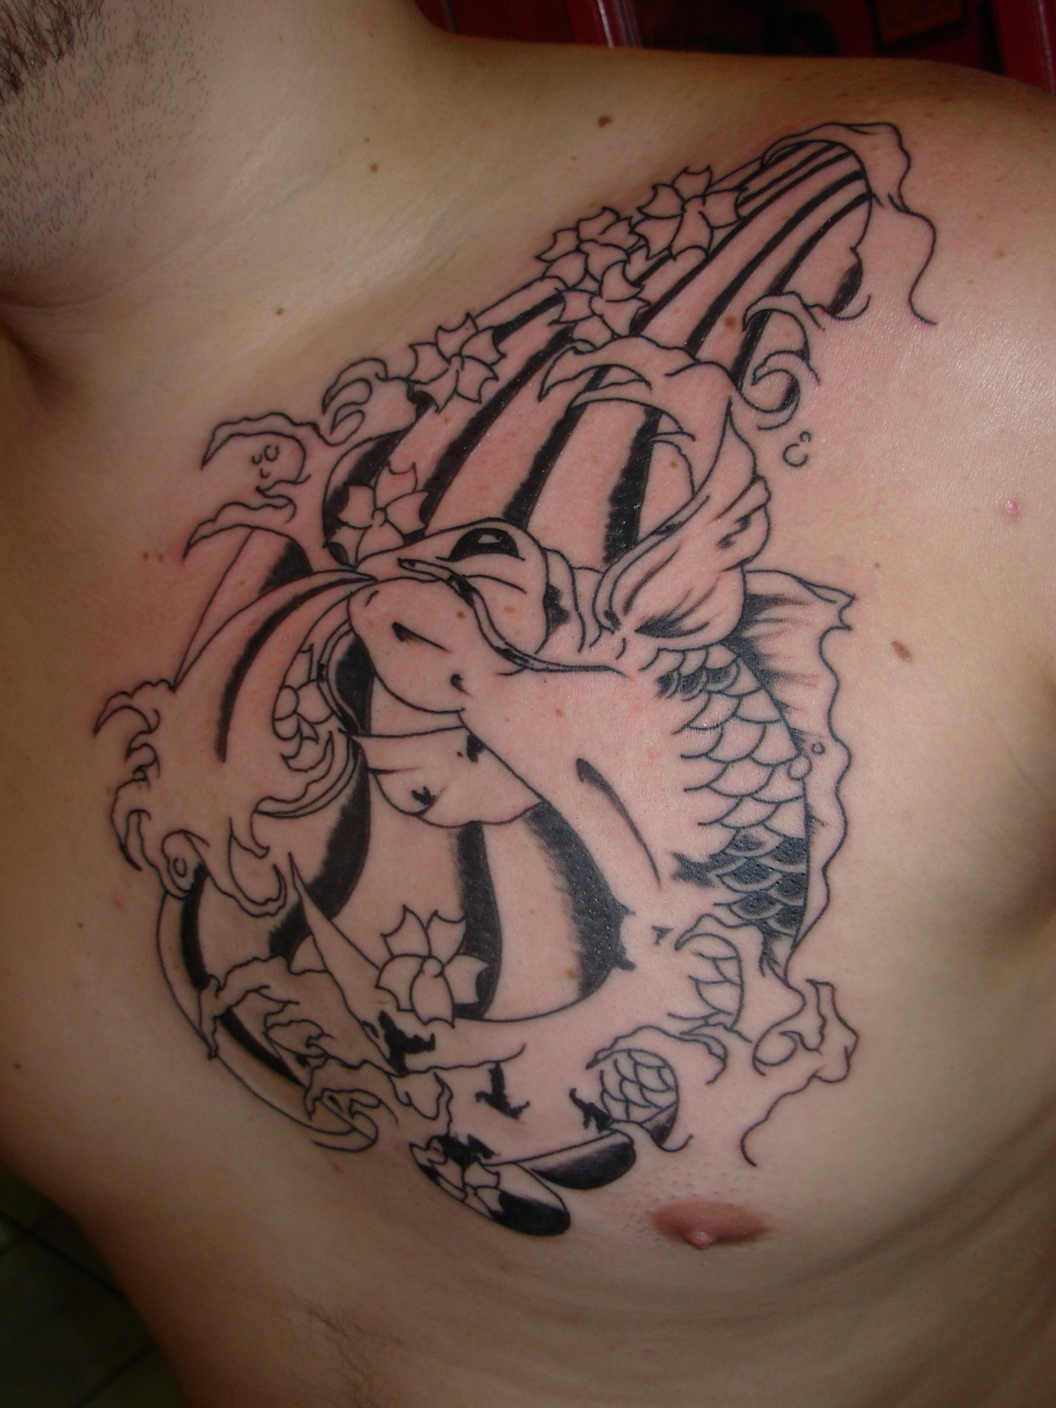 http://4.bp.blogspot.com/-Gi2uvYdwgAM/Tddtr88BEqI/AAAAAAAABAU/fPcUPI8fMNI/s1600/Koi-tattoo%20design.jpg